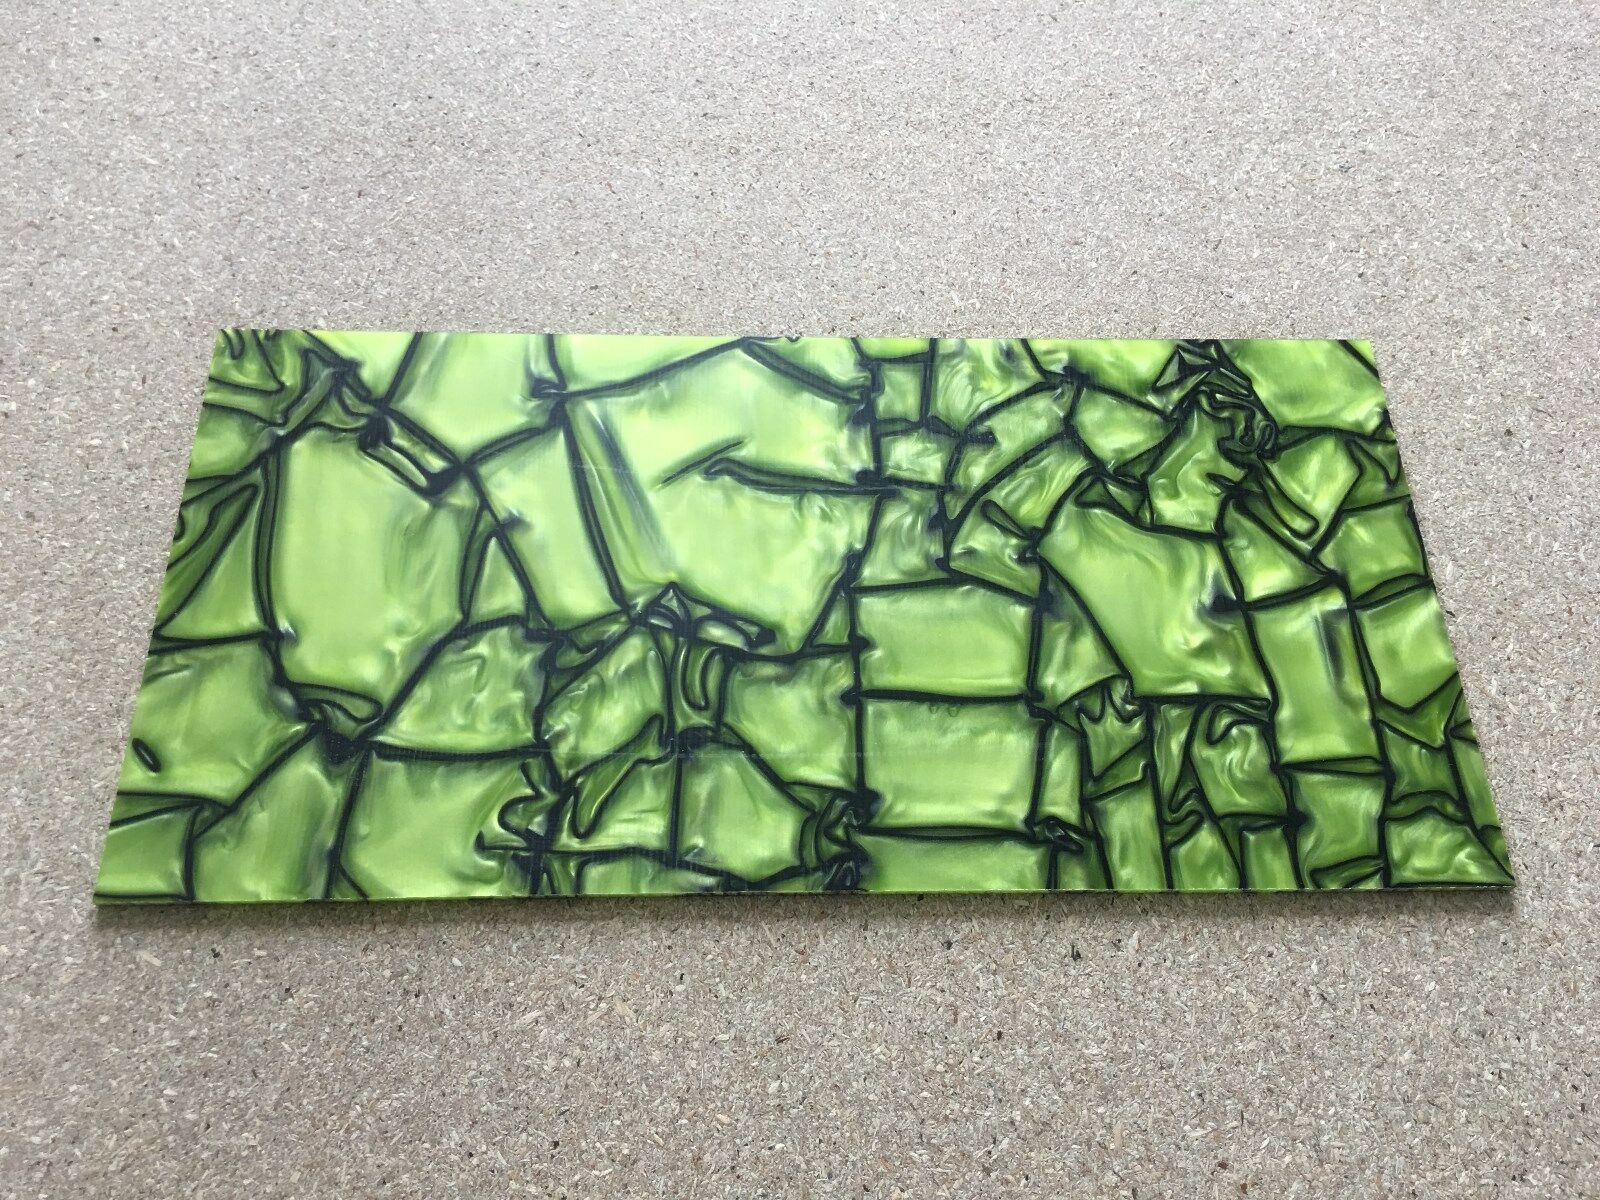 Kirinite Toxic Green 1/8" x 6" x 12" Sheet - UK Pen Blanks